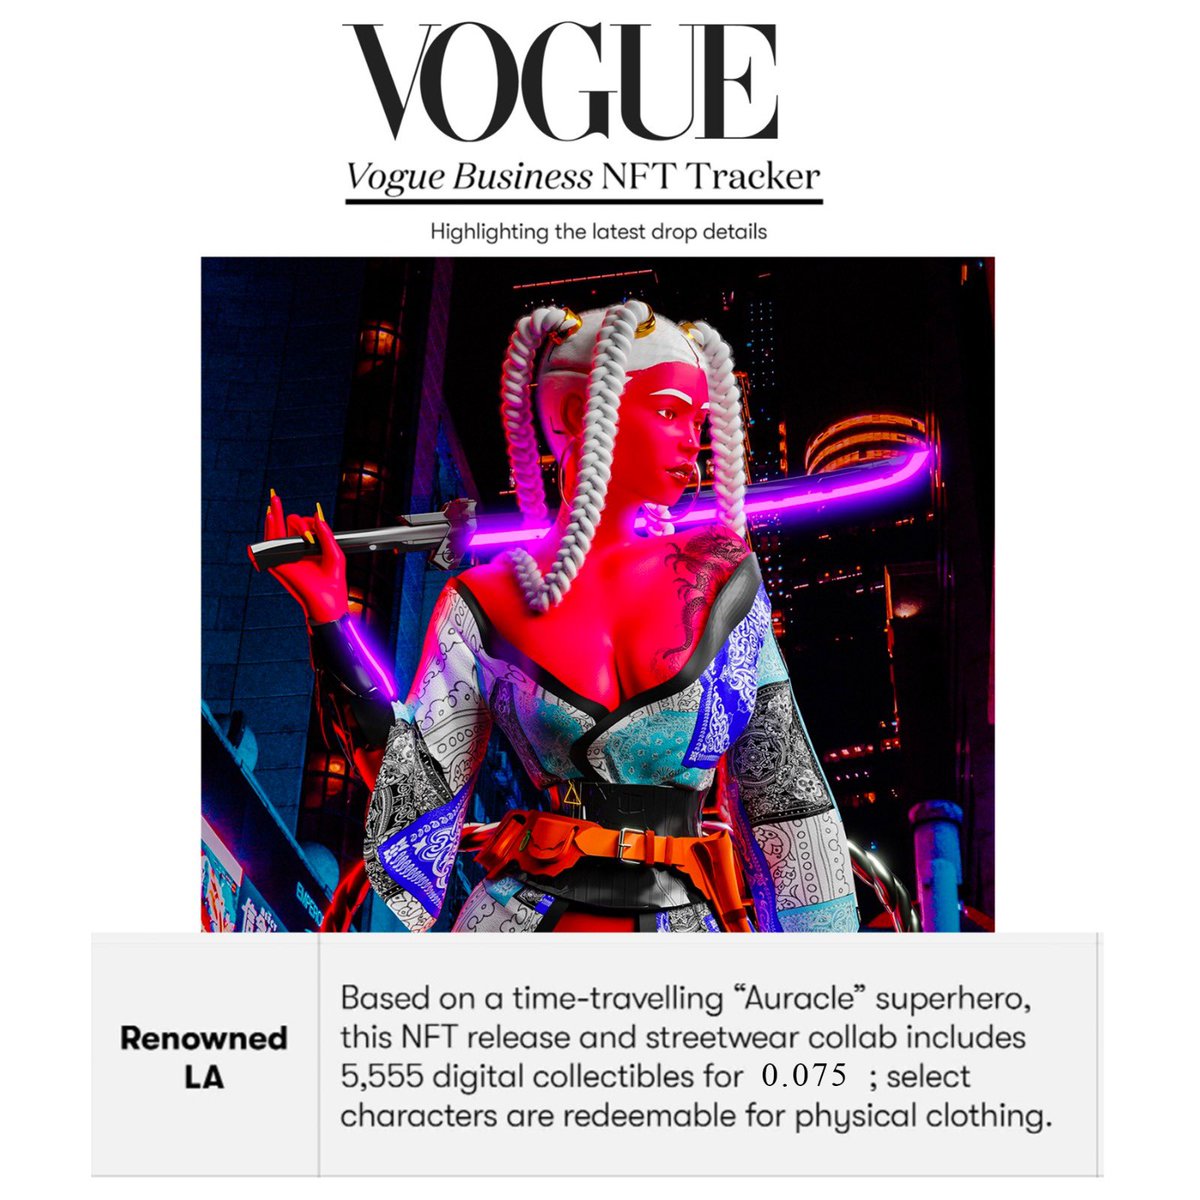 The Vogue Business NFT Tracker